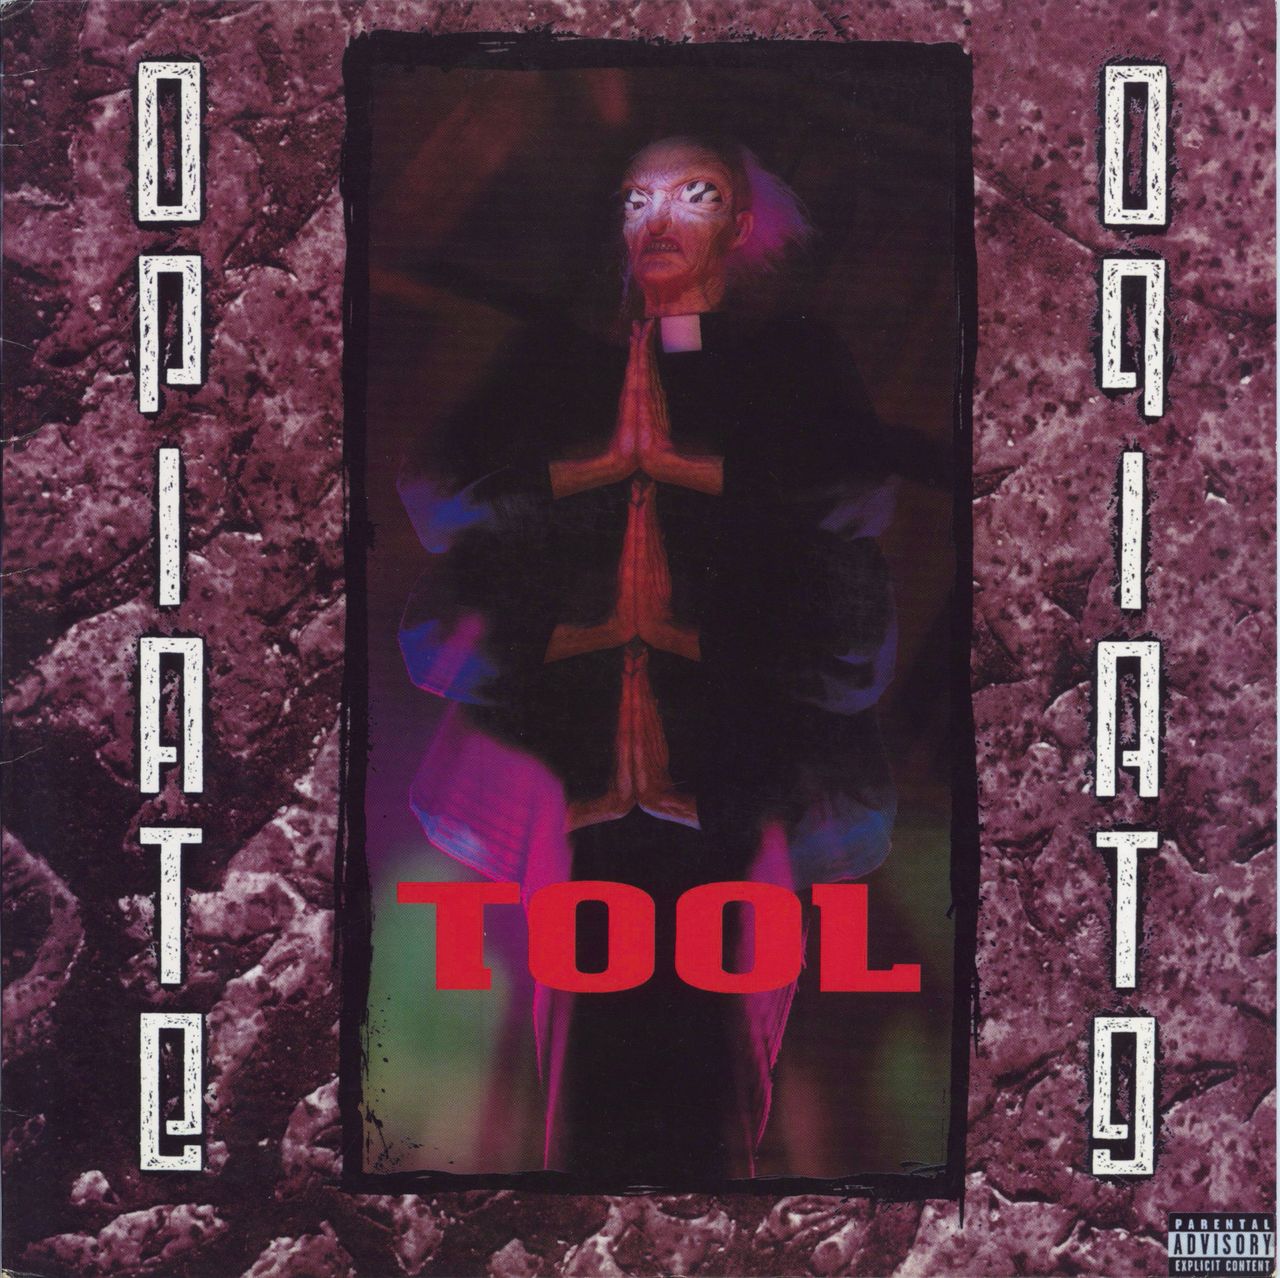 Tool Opiate - 2006 Issue - EX US 12" vinyl single (12 inch record / Maxi-single) 72445-11027-1